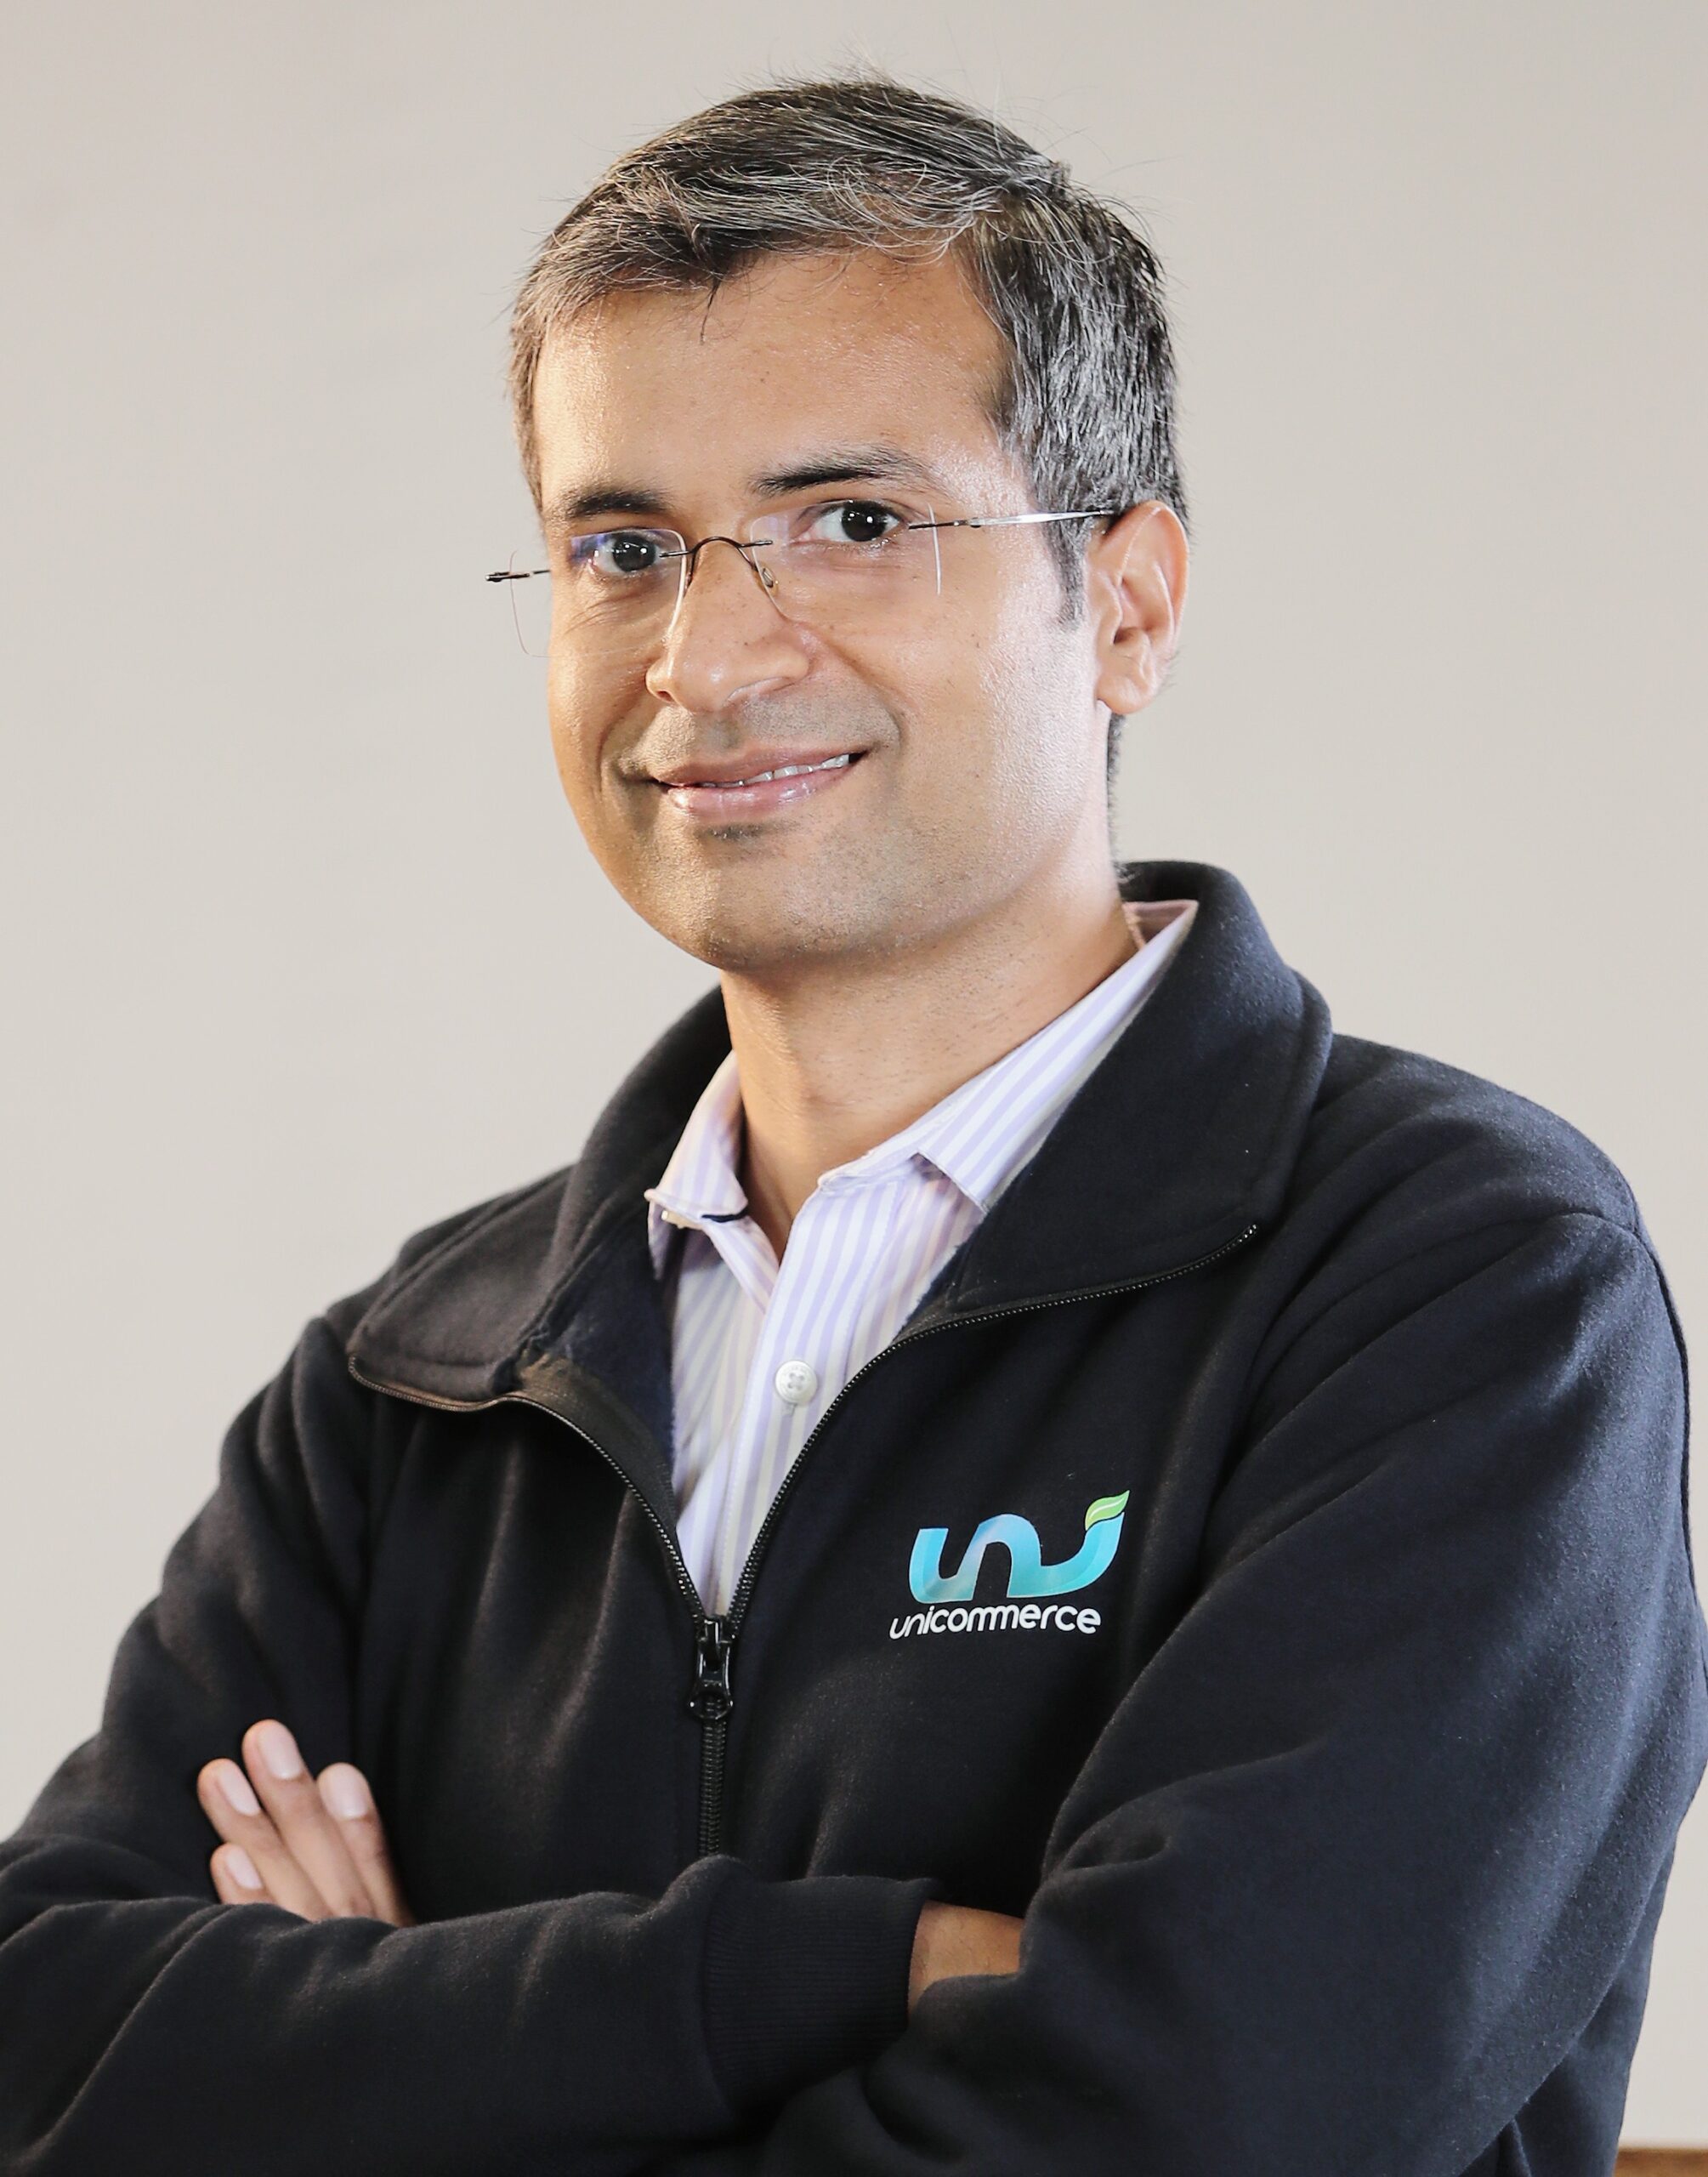 Wellify adopts Unicommerce to streamline its Ecommerce Operations